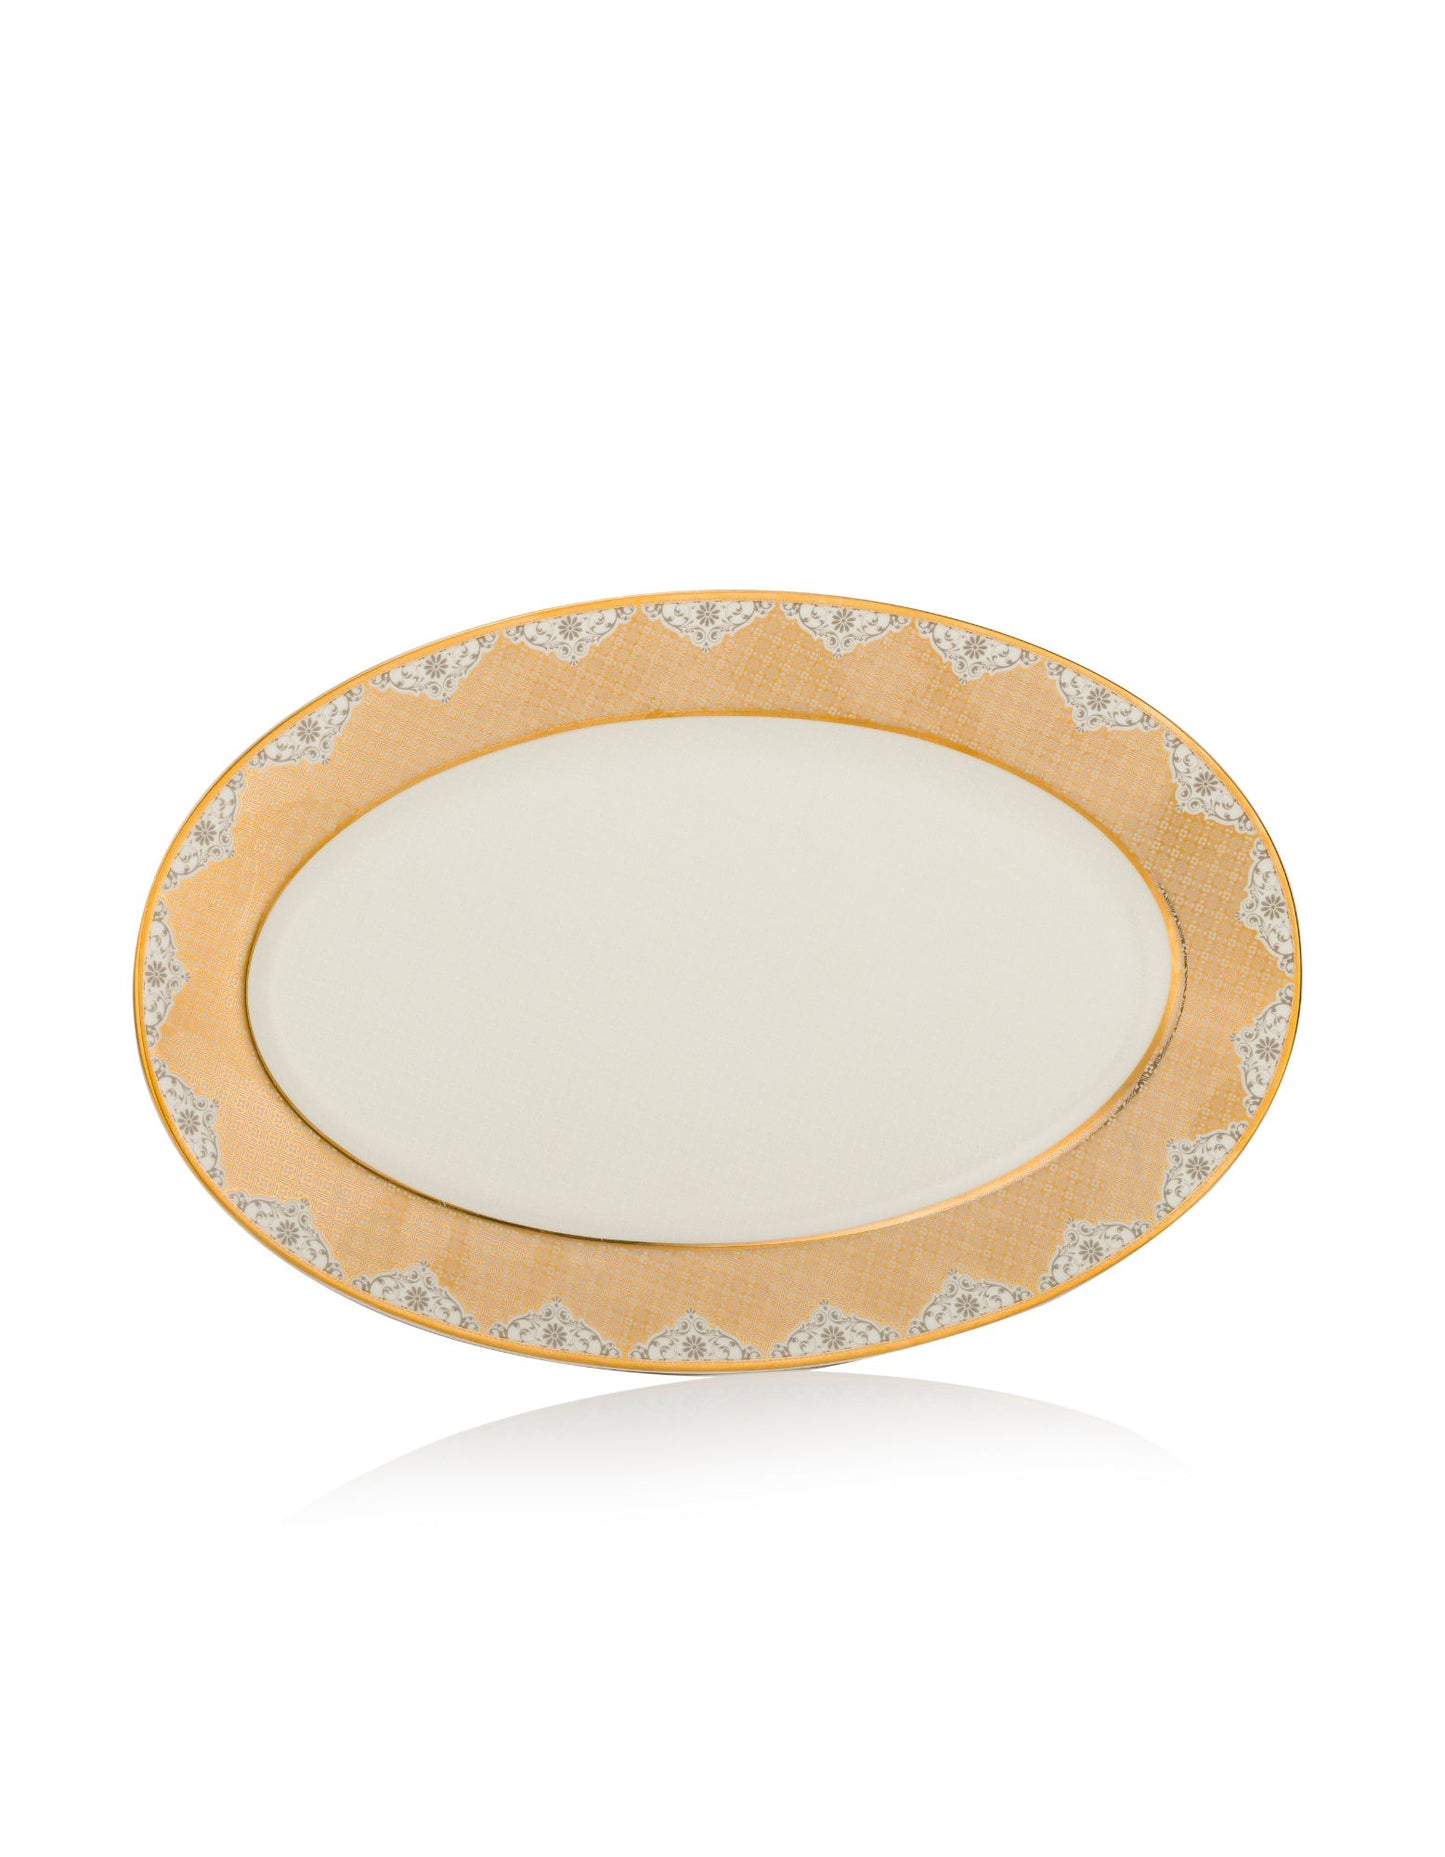 Mirror serving Platter